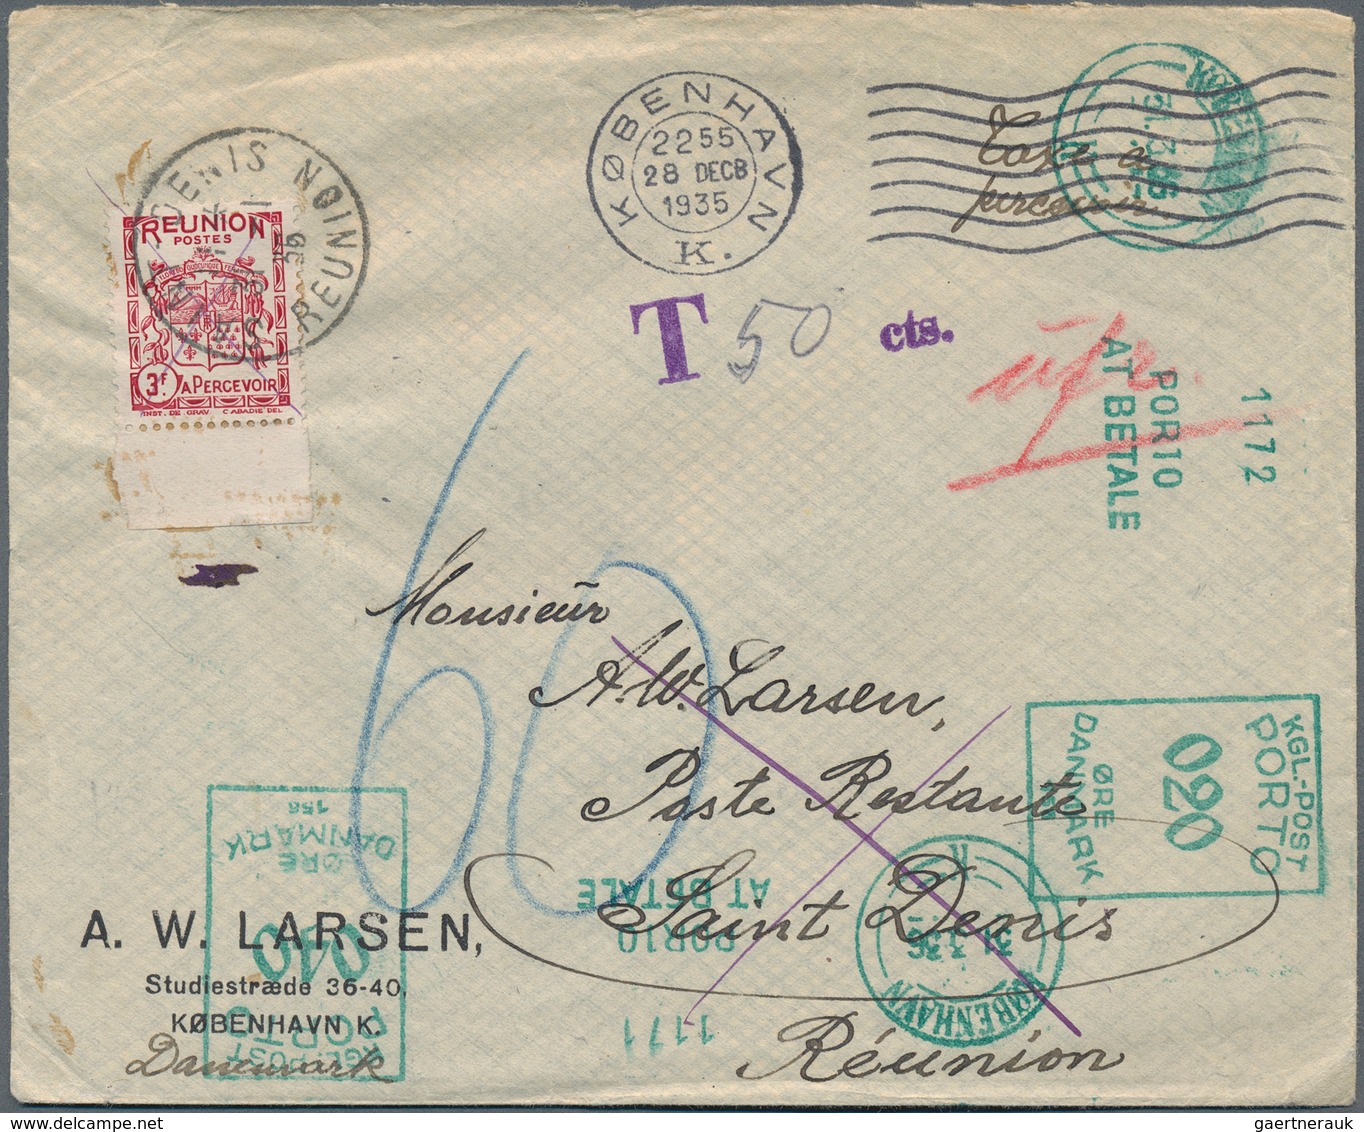 Reunion - Portomarken: 1935, Denmark: Unpaid Cover From KOBENHAVN, 28.12.1935, With Manuscript Note - Portomarken